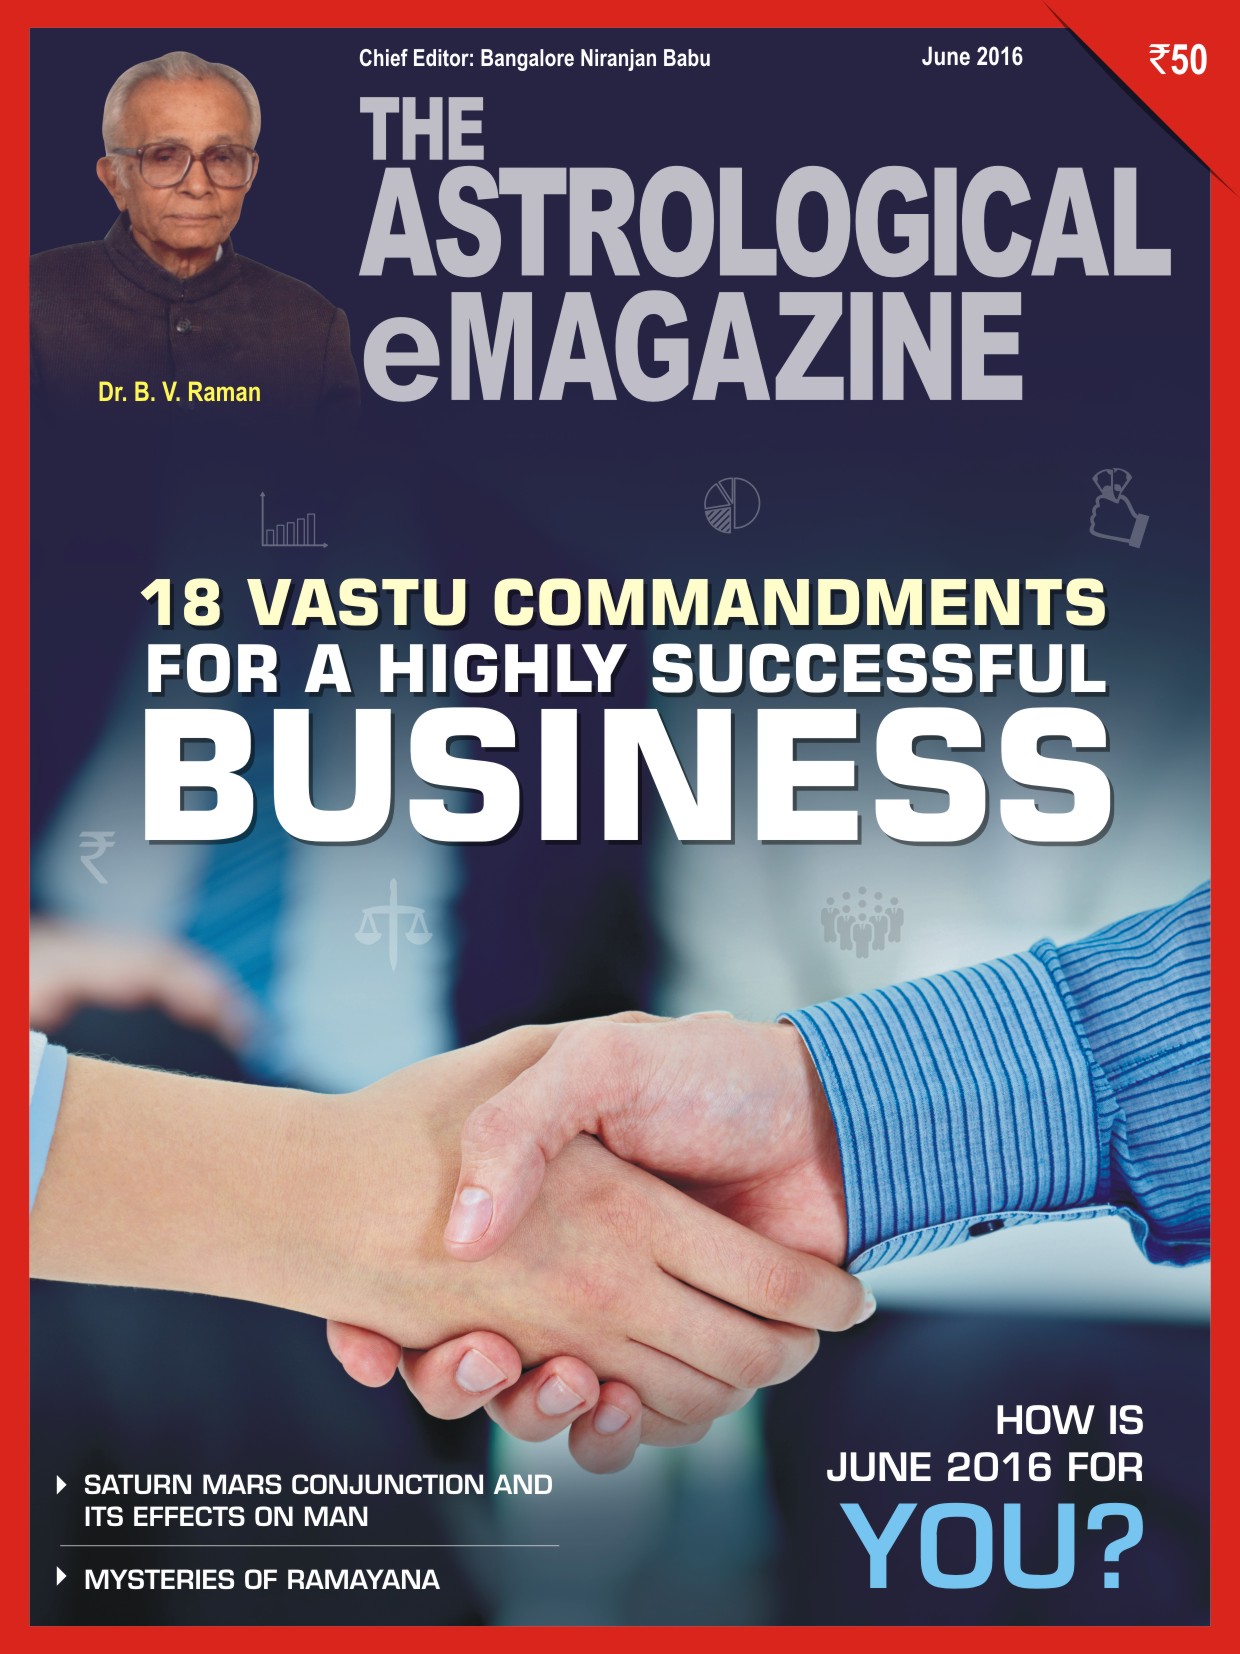 The Astrological eMagazine June 2016